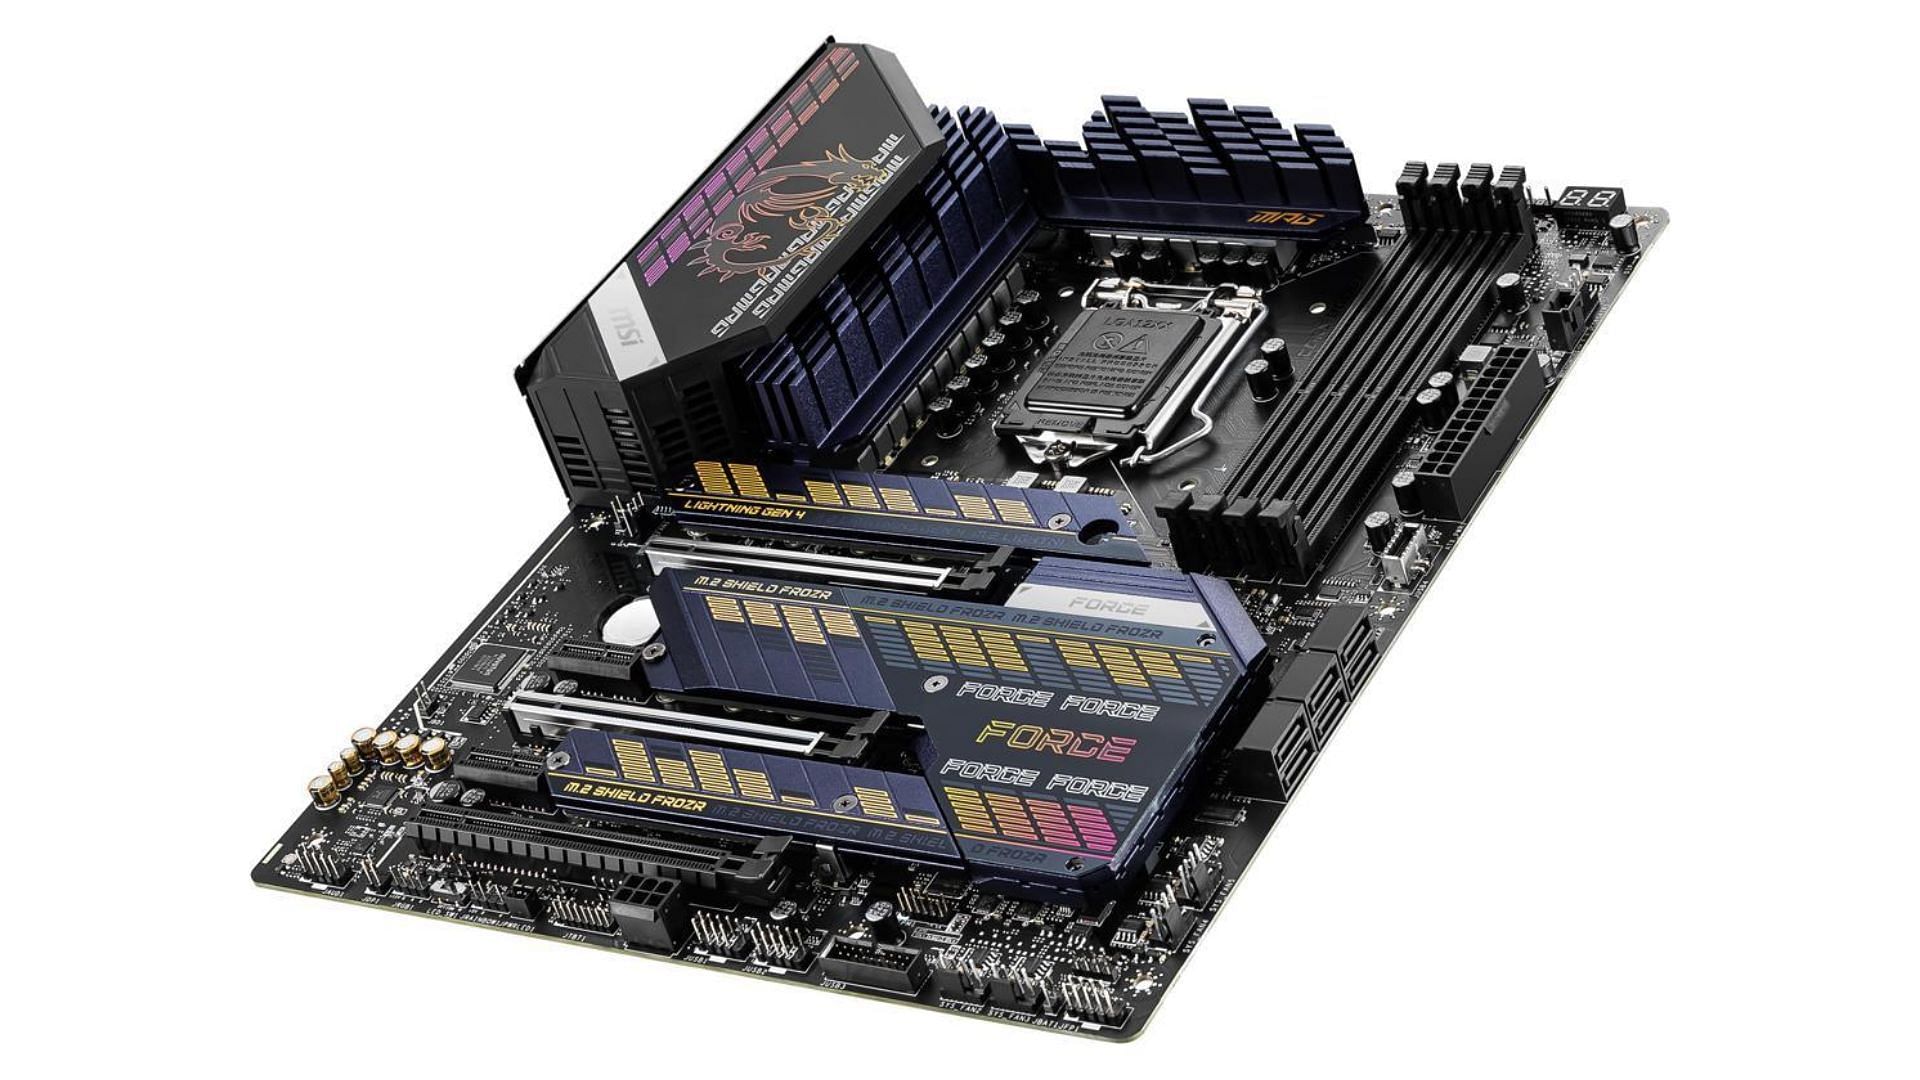 The MSI MPG Z590 Gaming Force LGA 1200 ATX motherboard (Image via Newegg)